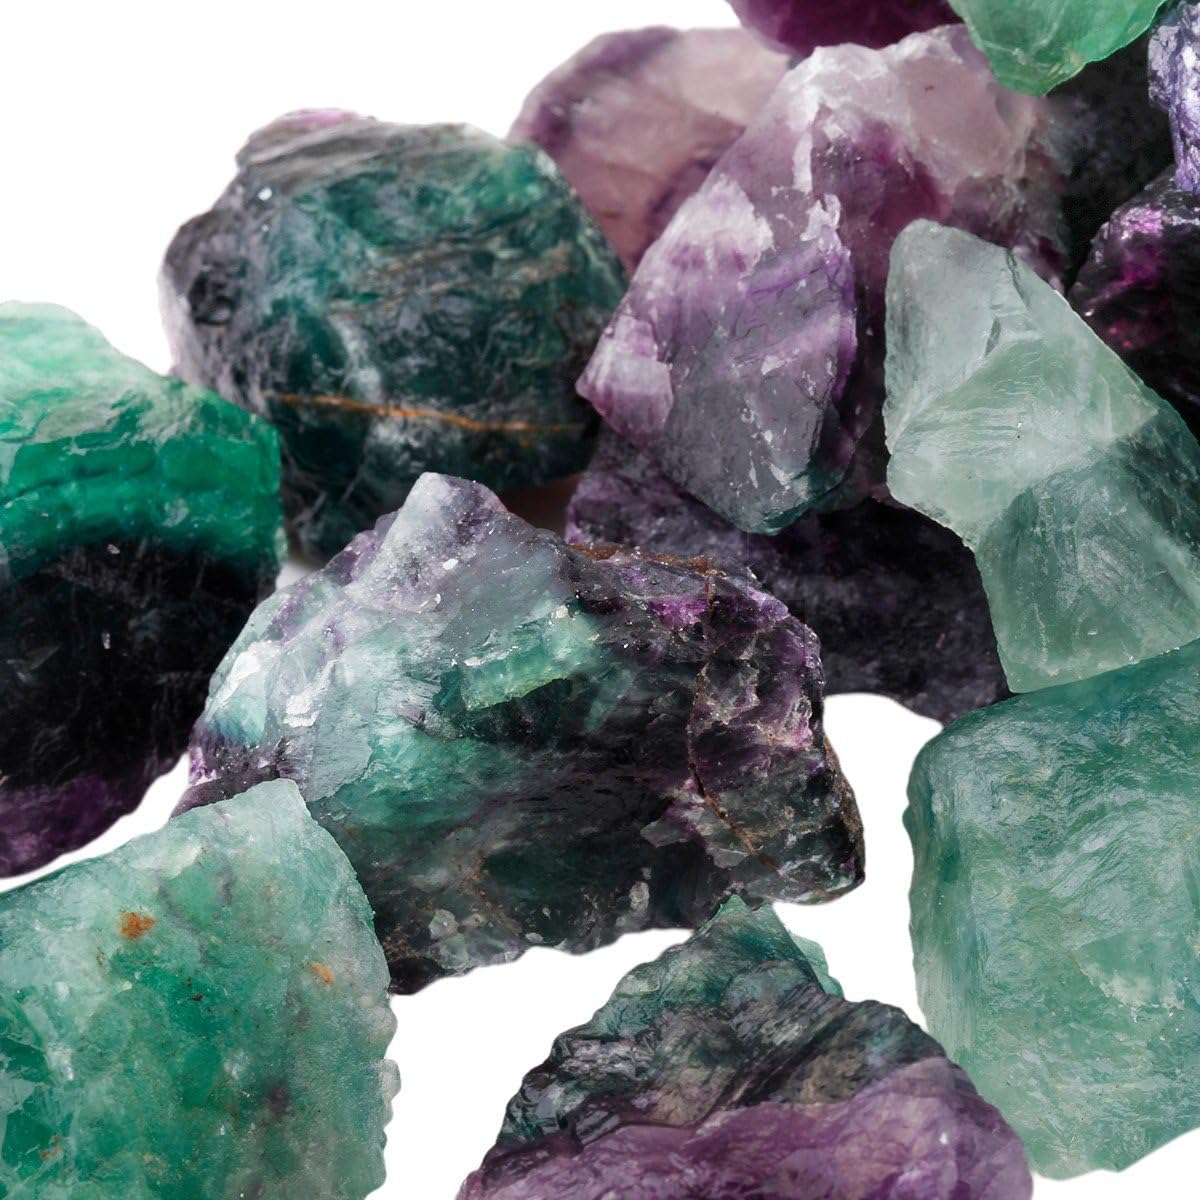 rockcloud 1 lb Natural Crystals Raw Rough Stones for Cabbing,Tumbling,Cutting,Lapidary,Polishing,Reiki Crytsal Healing,Fluorite